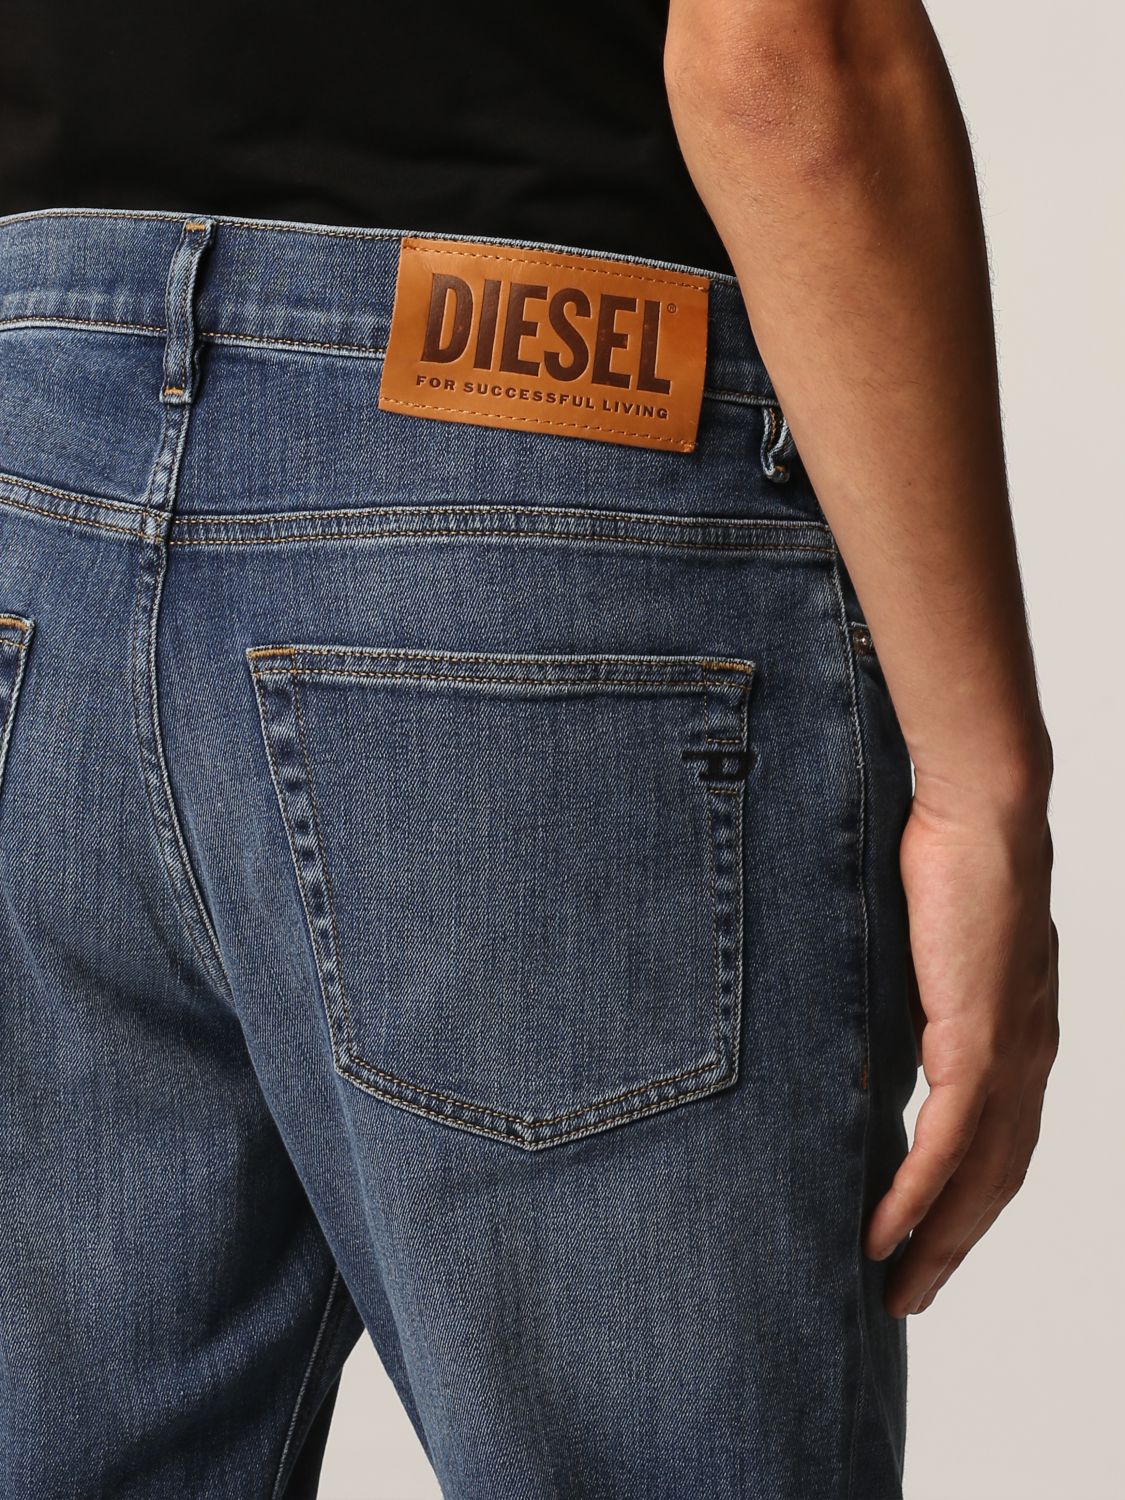 screech Recollection Multiplikation DIESEL: D-finig regular fit jeans | Jeans Diesel Men Denim | Jeans Diesel  A01695 09A80 GIGLIO.COM